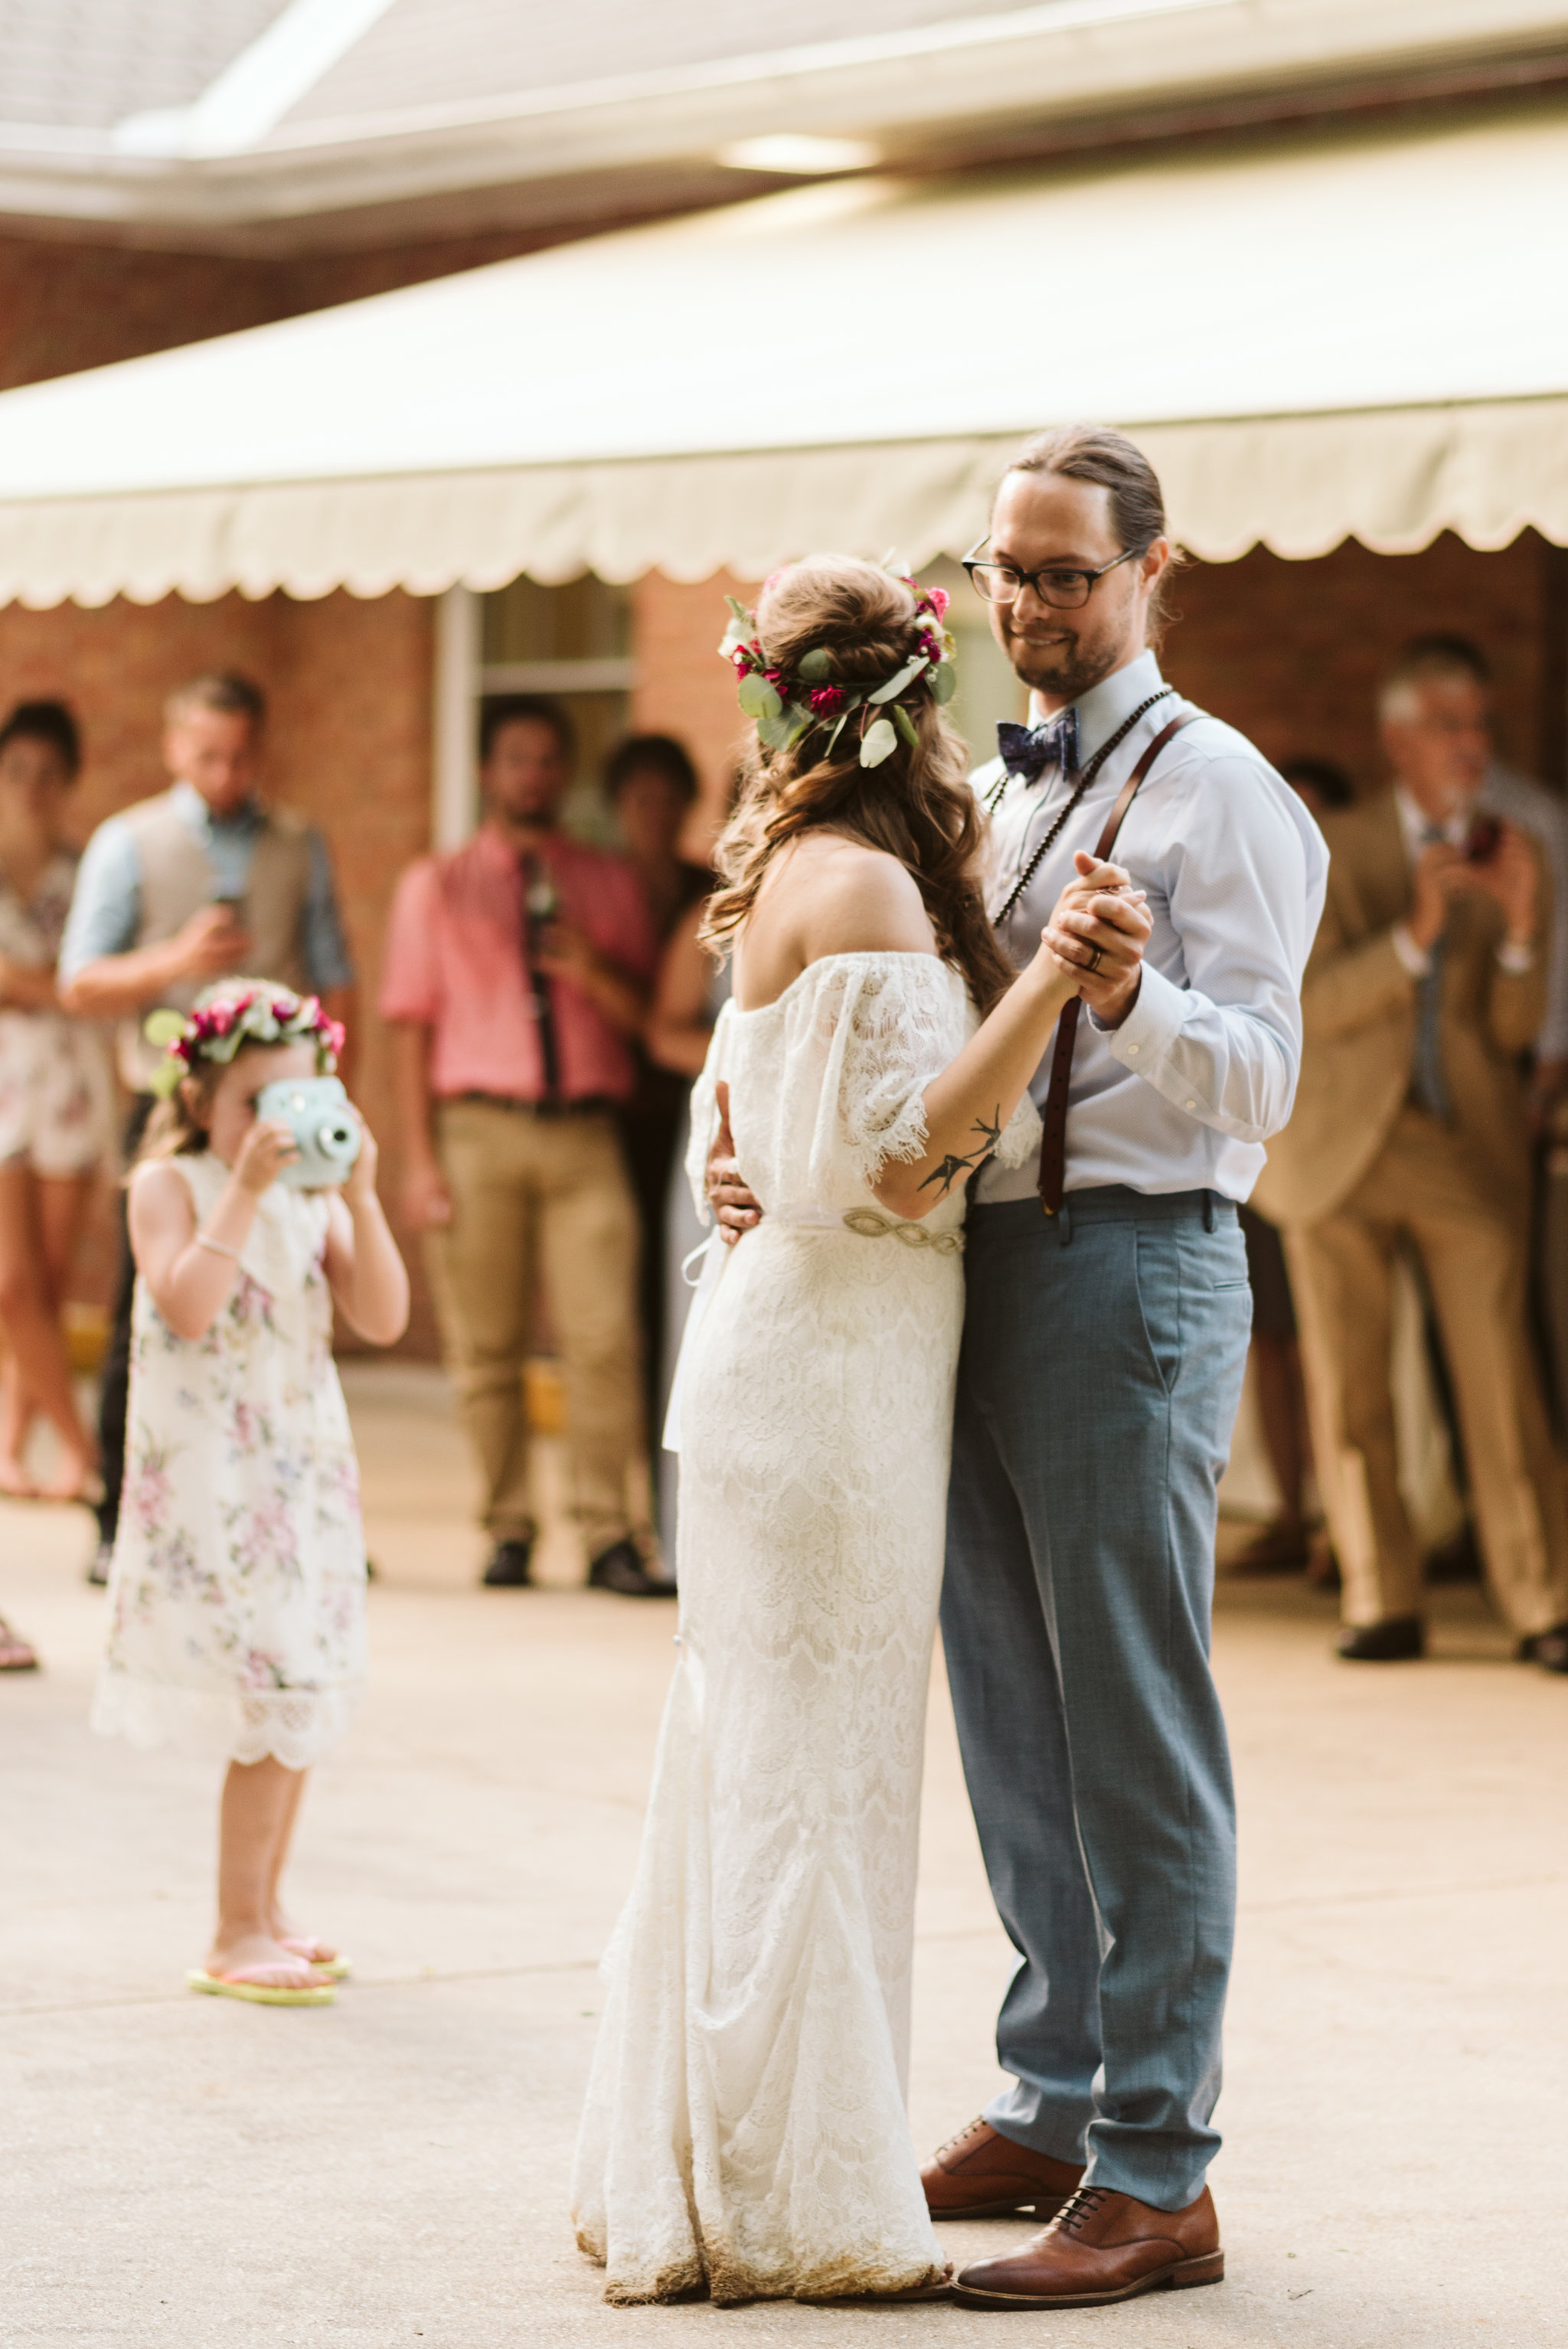  Annapolis, Quaker Wedding, Maryland Wedding Photographer, Intimate, Small Wedding, Vintage, DIY, Bride and Groom First Dance, Child with Polaroid 